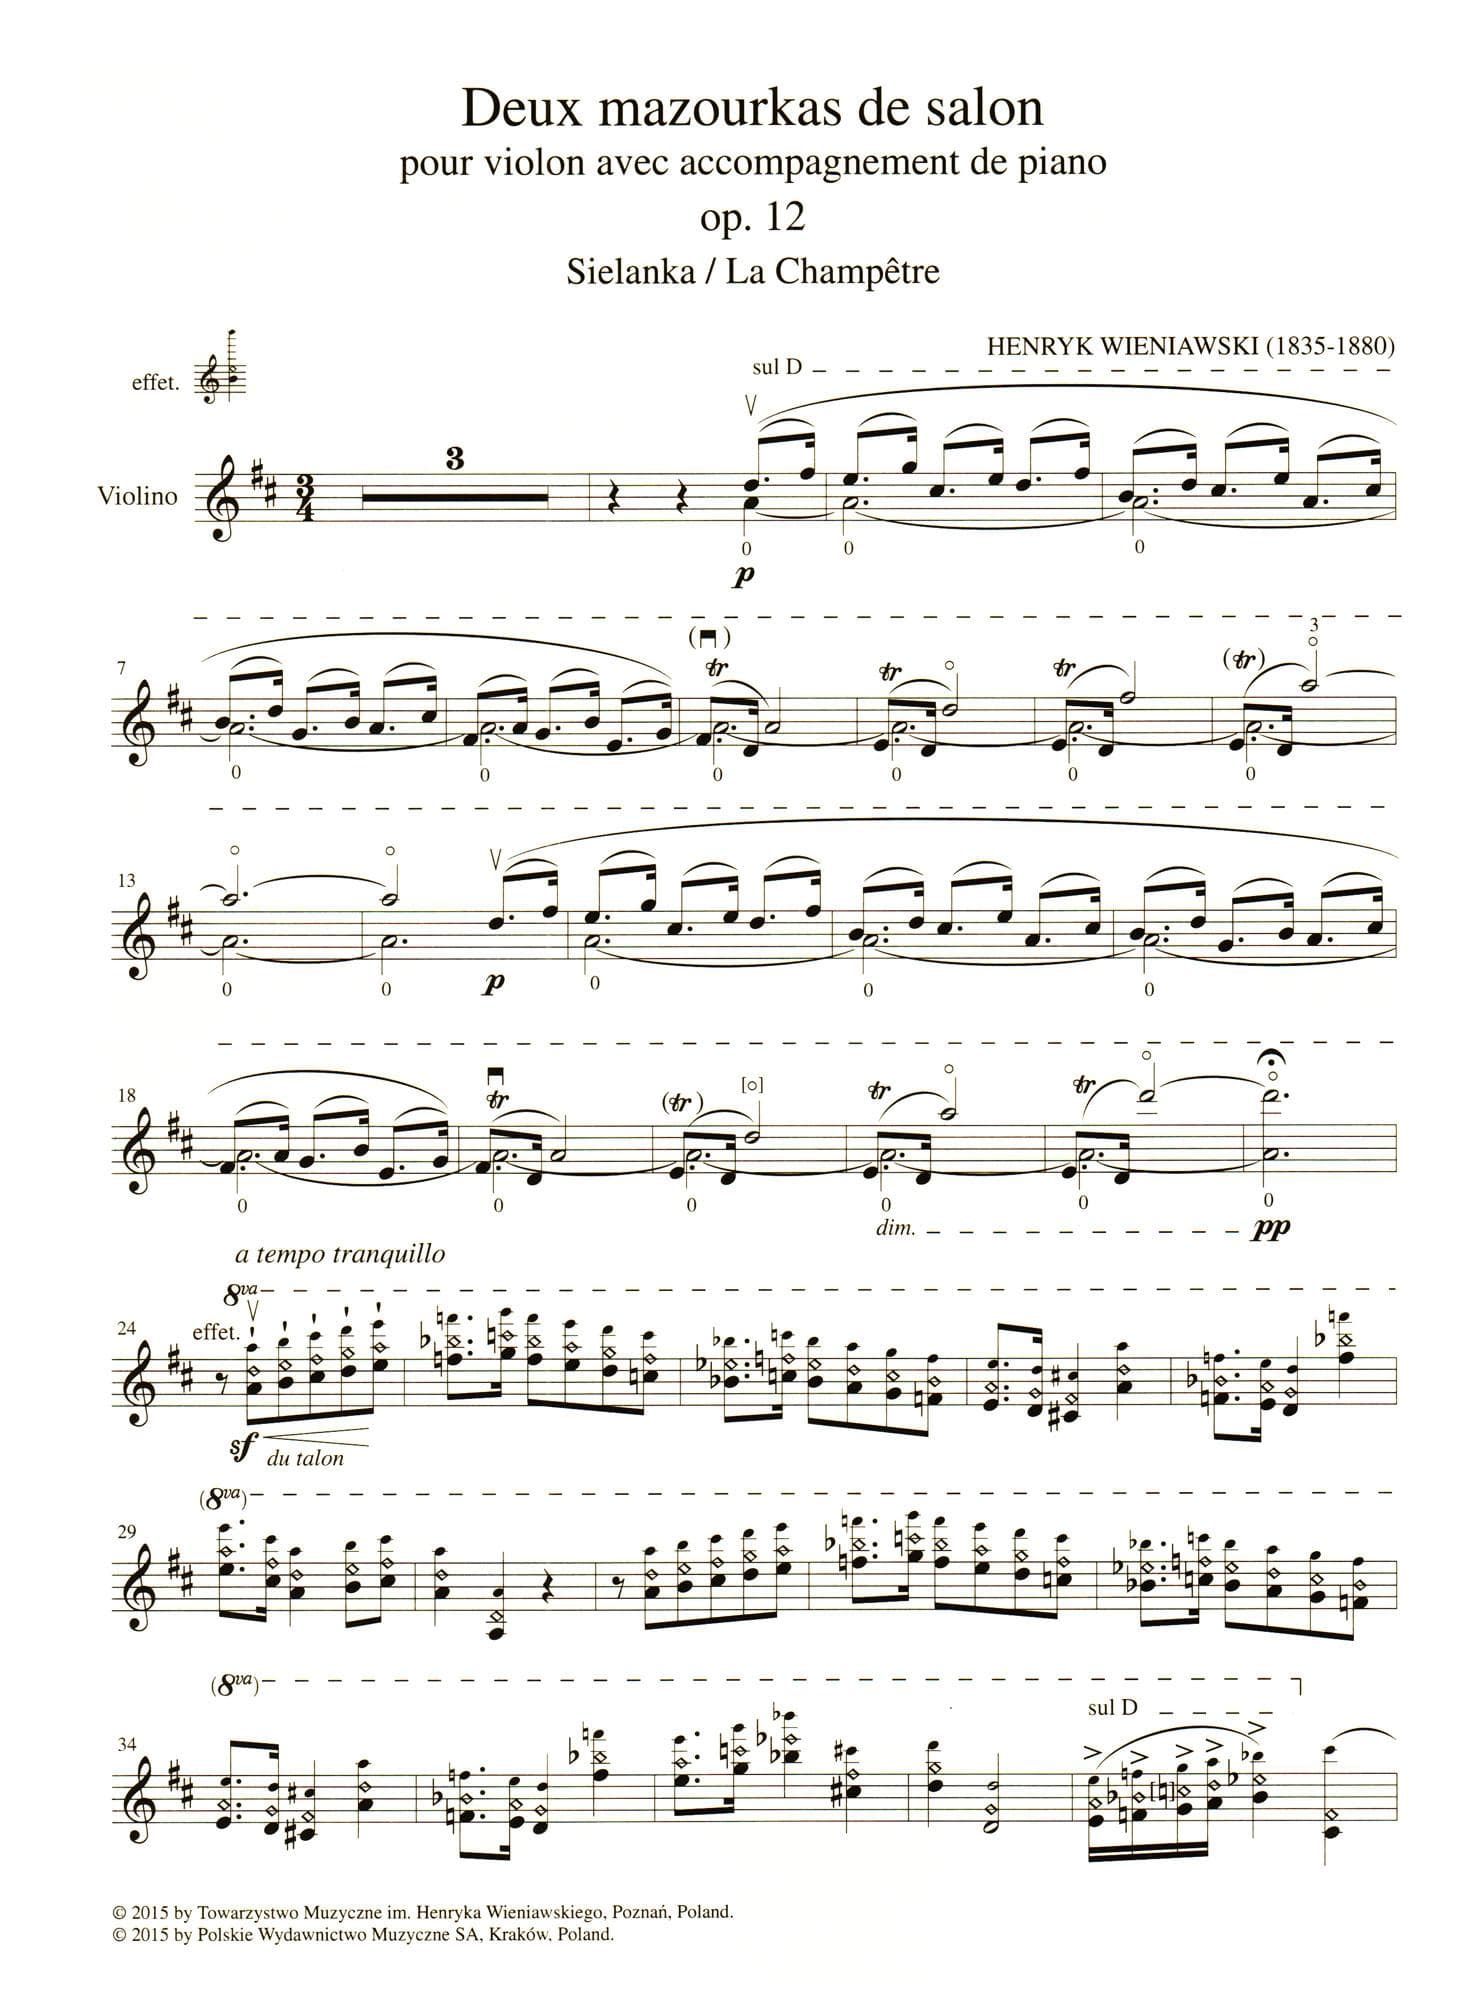 Wieniawski, Henryk - Two Mazurkas, Op. 12 - for Violin and Piano - edited by Zofia Chechlinska - PWM Edition